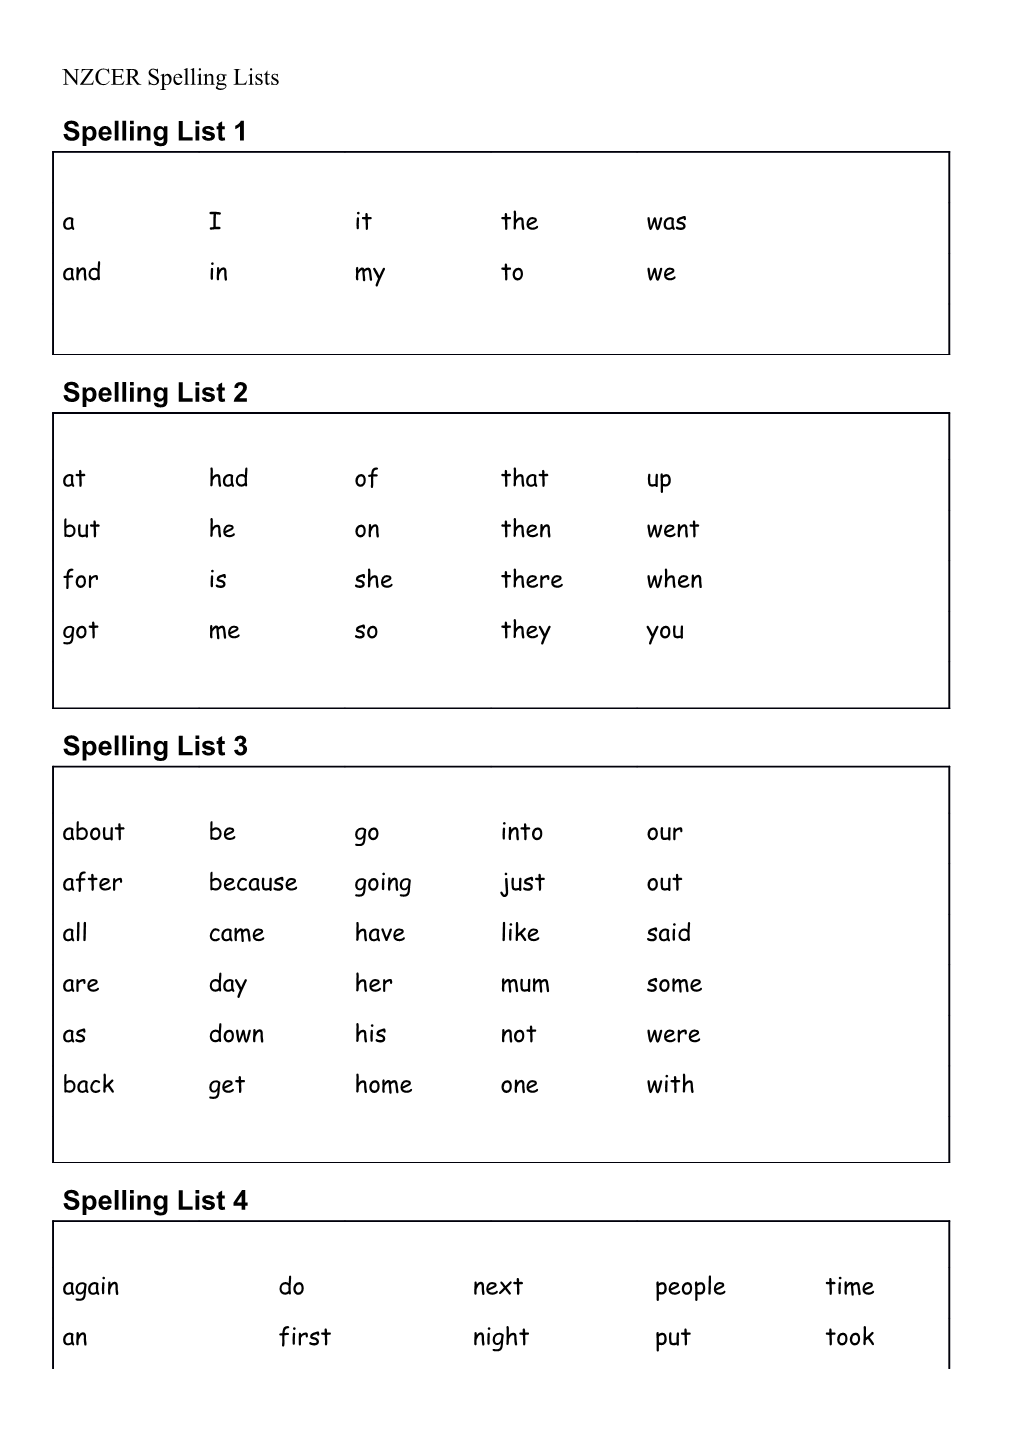 NZCER Spelling Lists